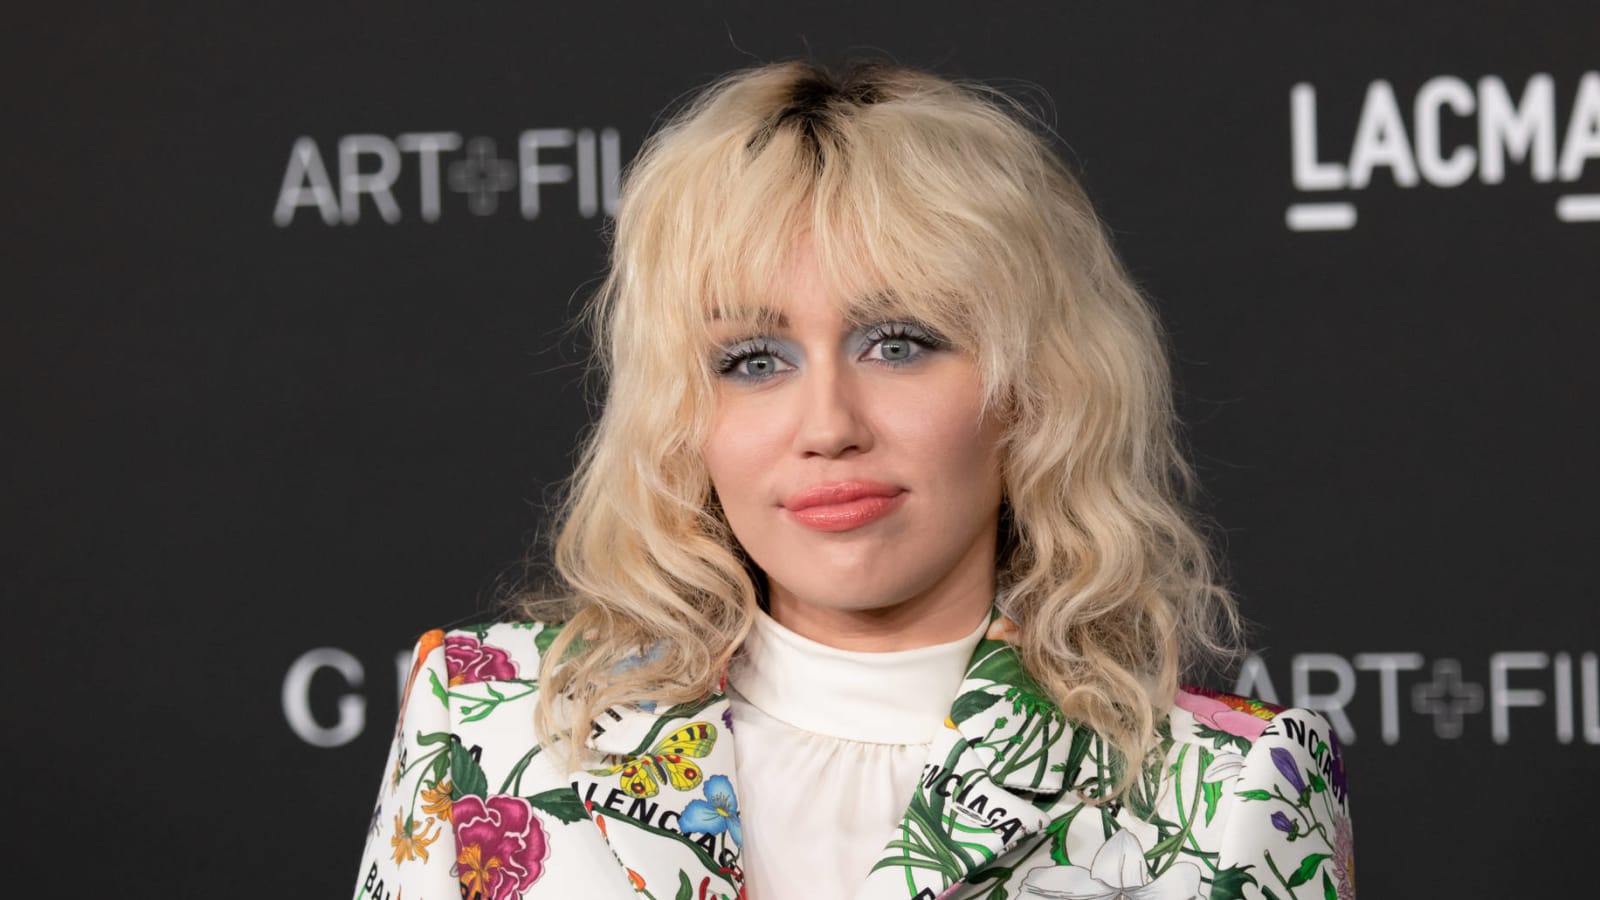 Miley Cyrus responds to Grammy snub: 'In good company'